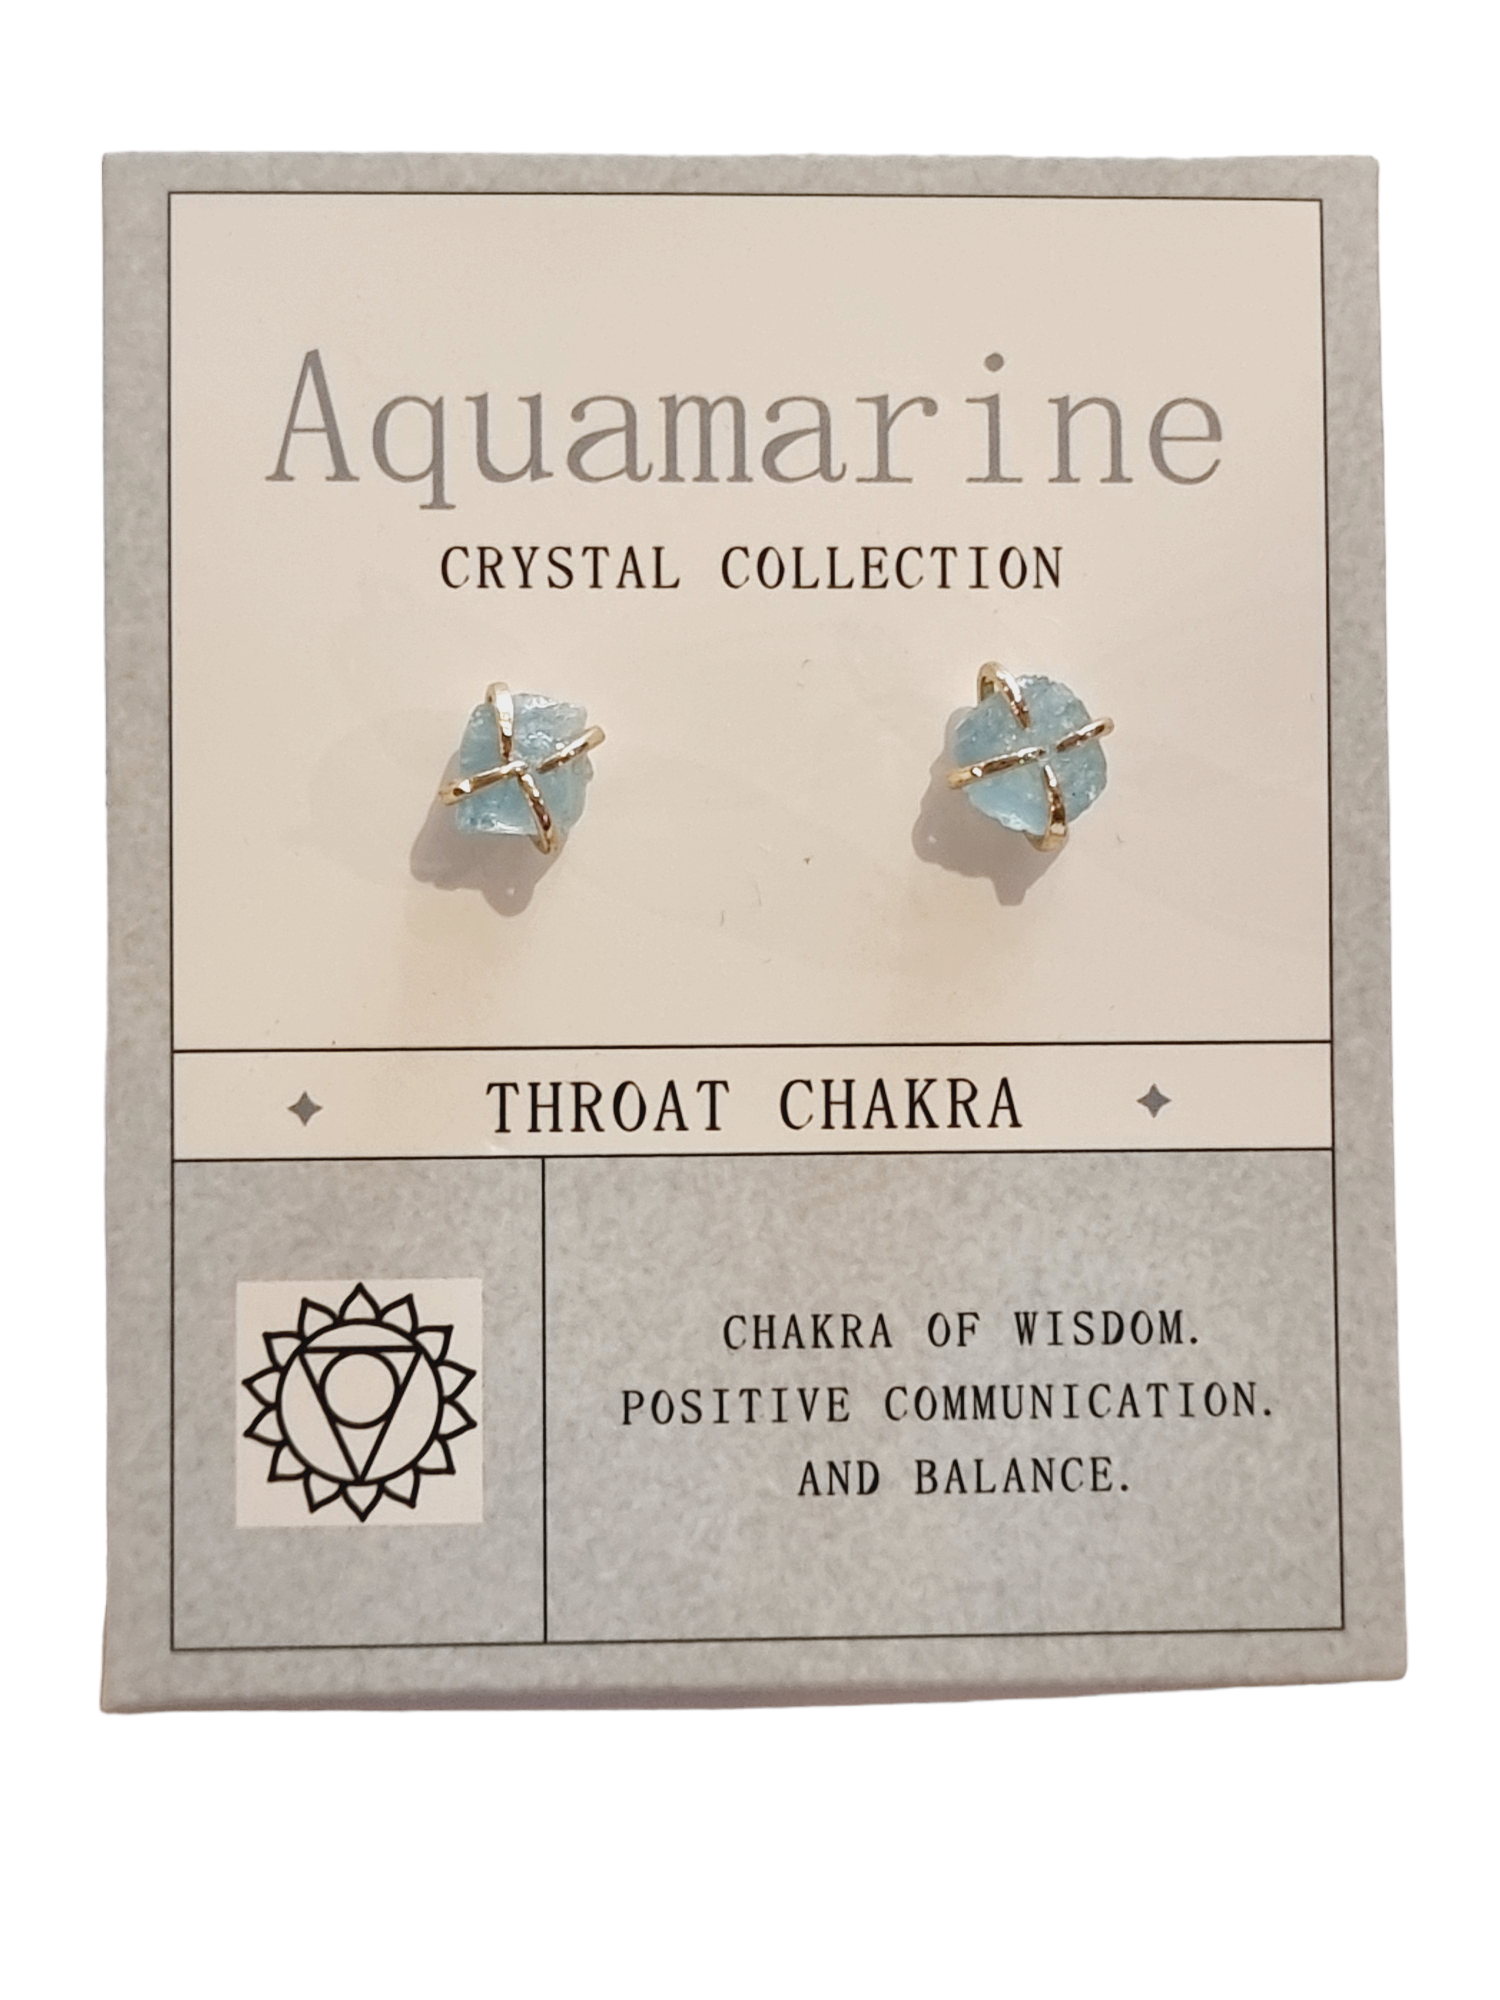 Aquamarine Throat Chakra Earrings